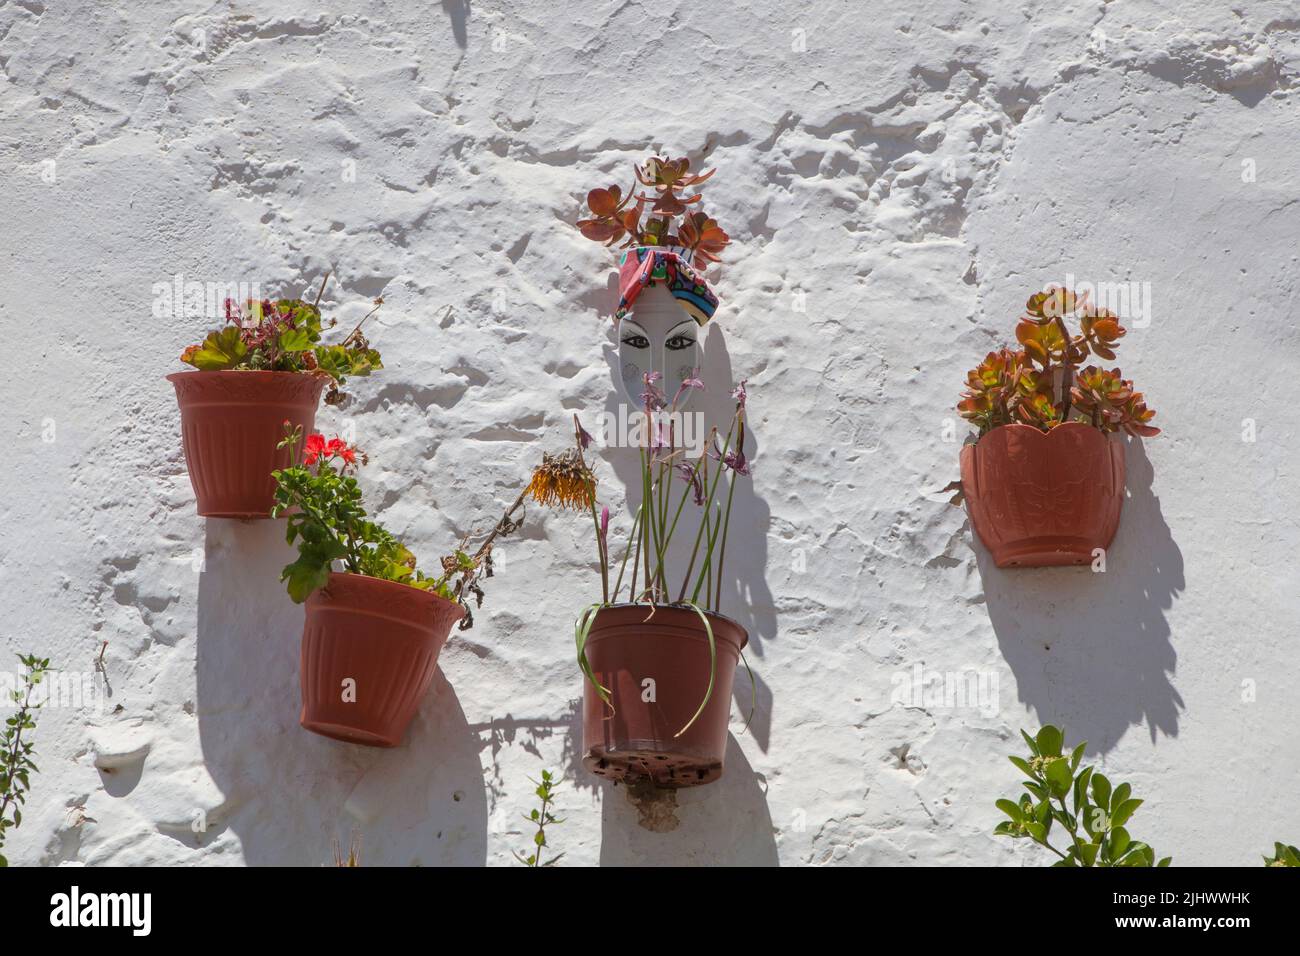 Contenedores de detergente reutilizados como flowerpot y fijados a la pared exterior. Magacela Conjunto histórico, Badajoz, Extremadura, España Foto de stock